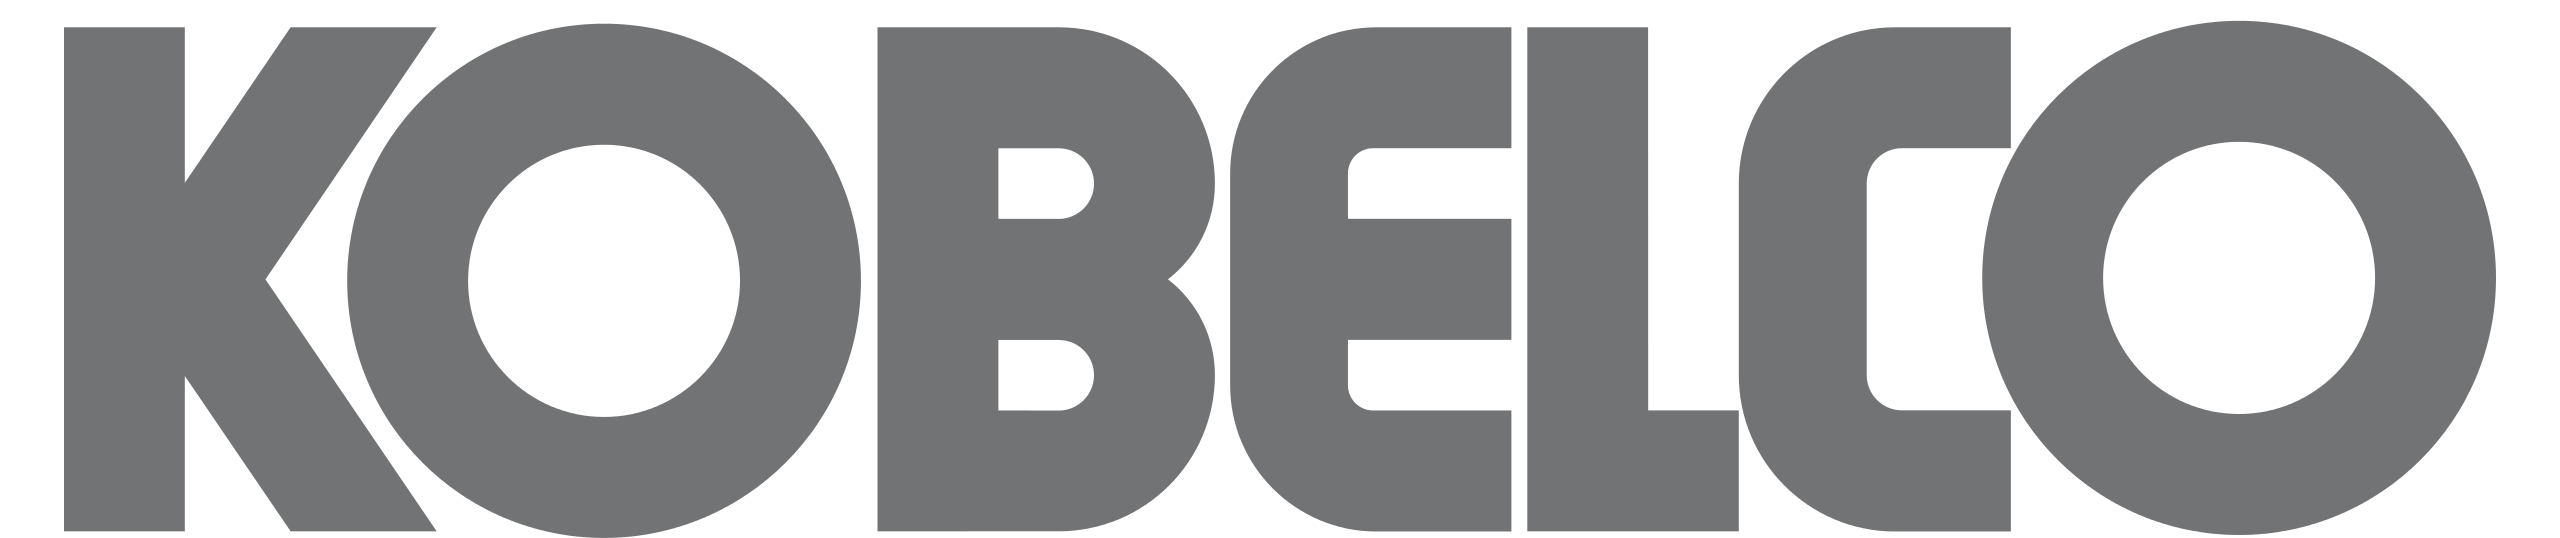 Kobelco_logo